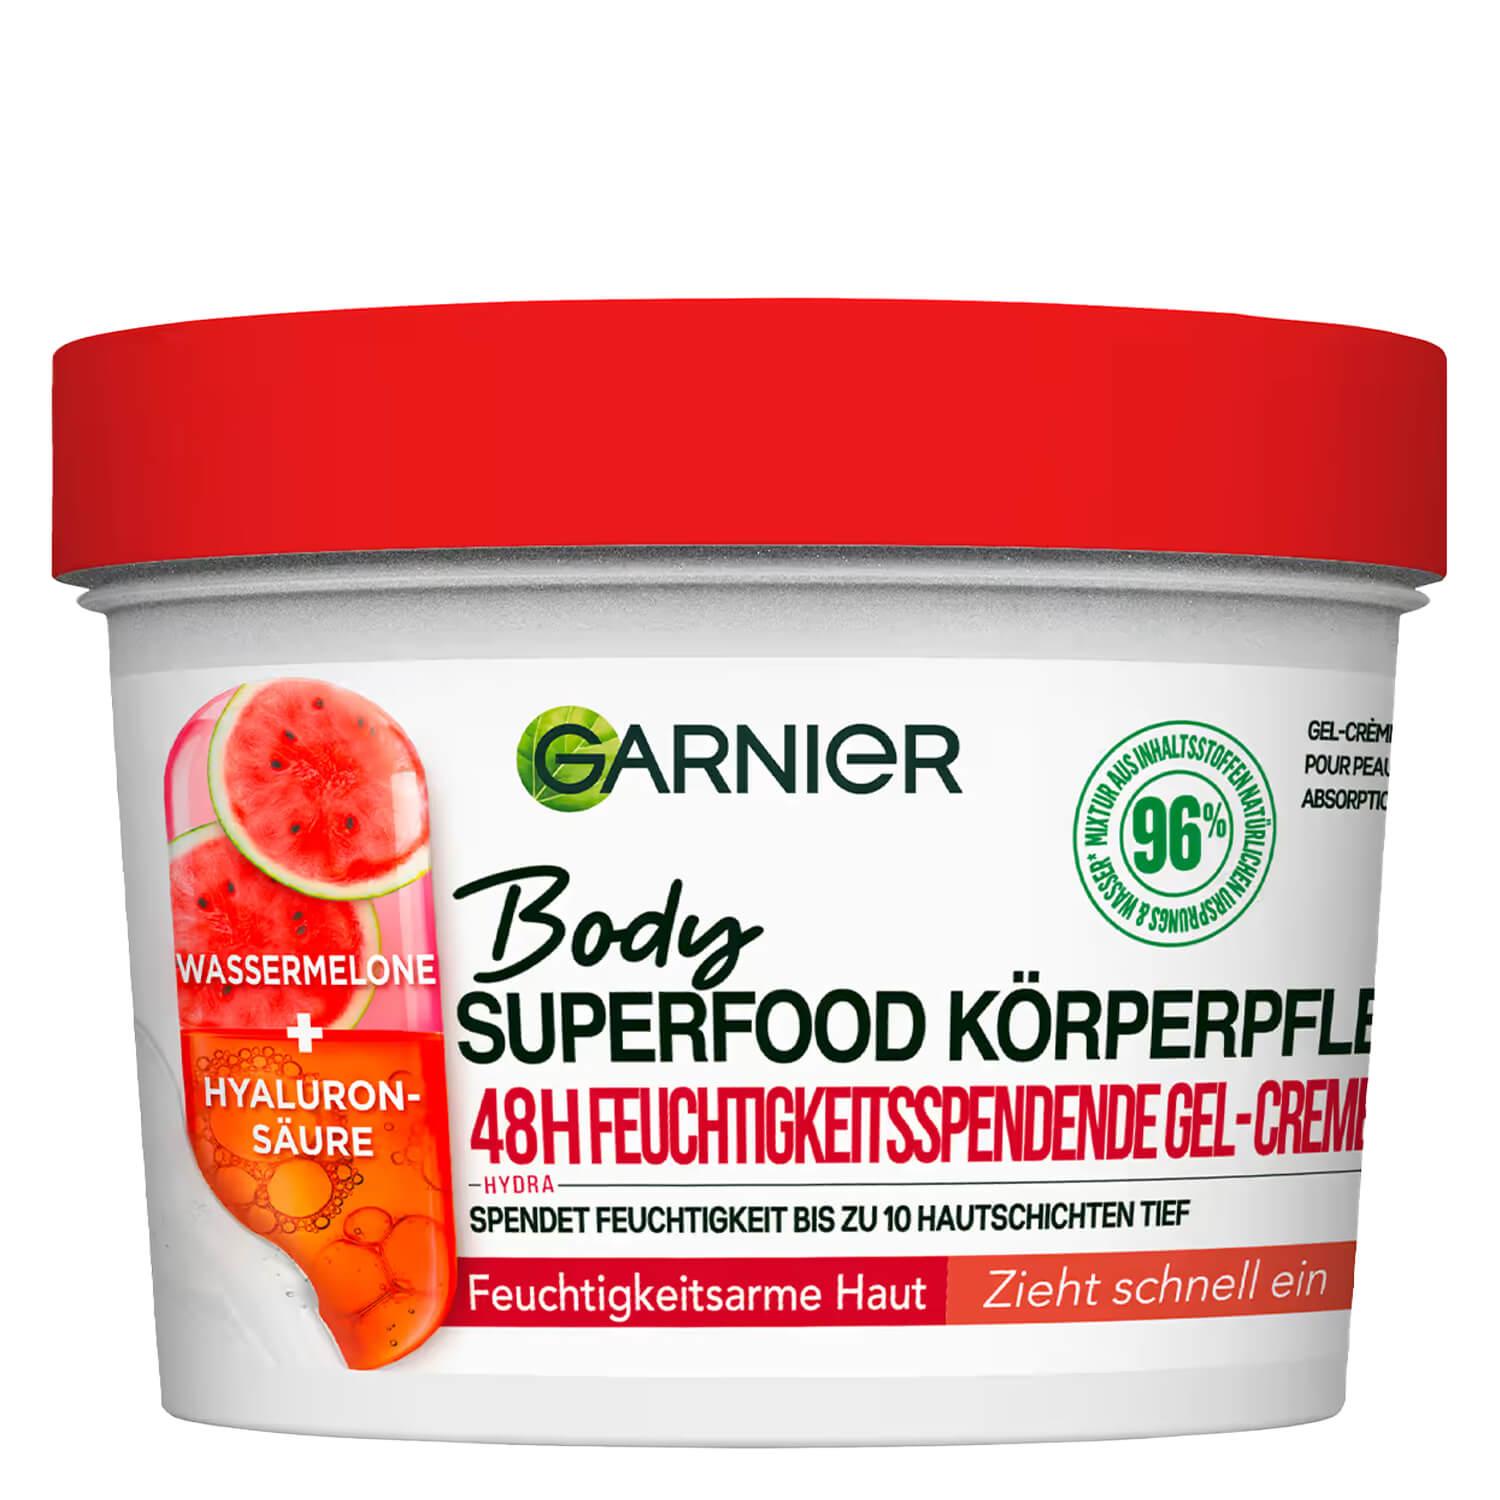 Skinactive Body - Body Superfood 48H Moisturising Gel-Cream Watermelon & Hyaluronic Acid